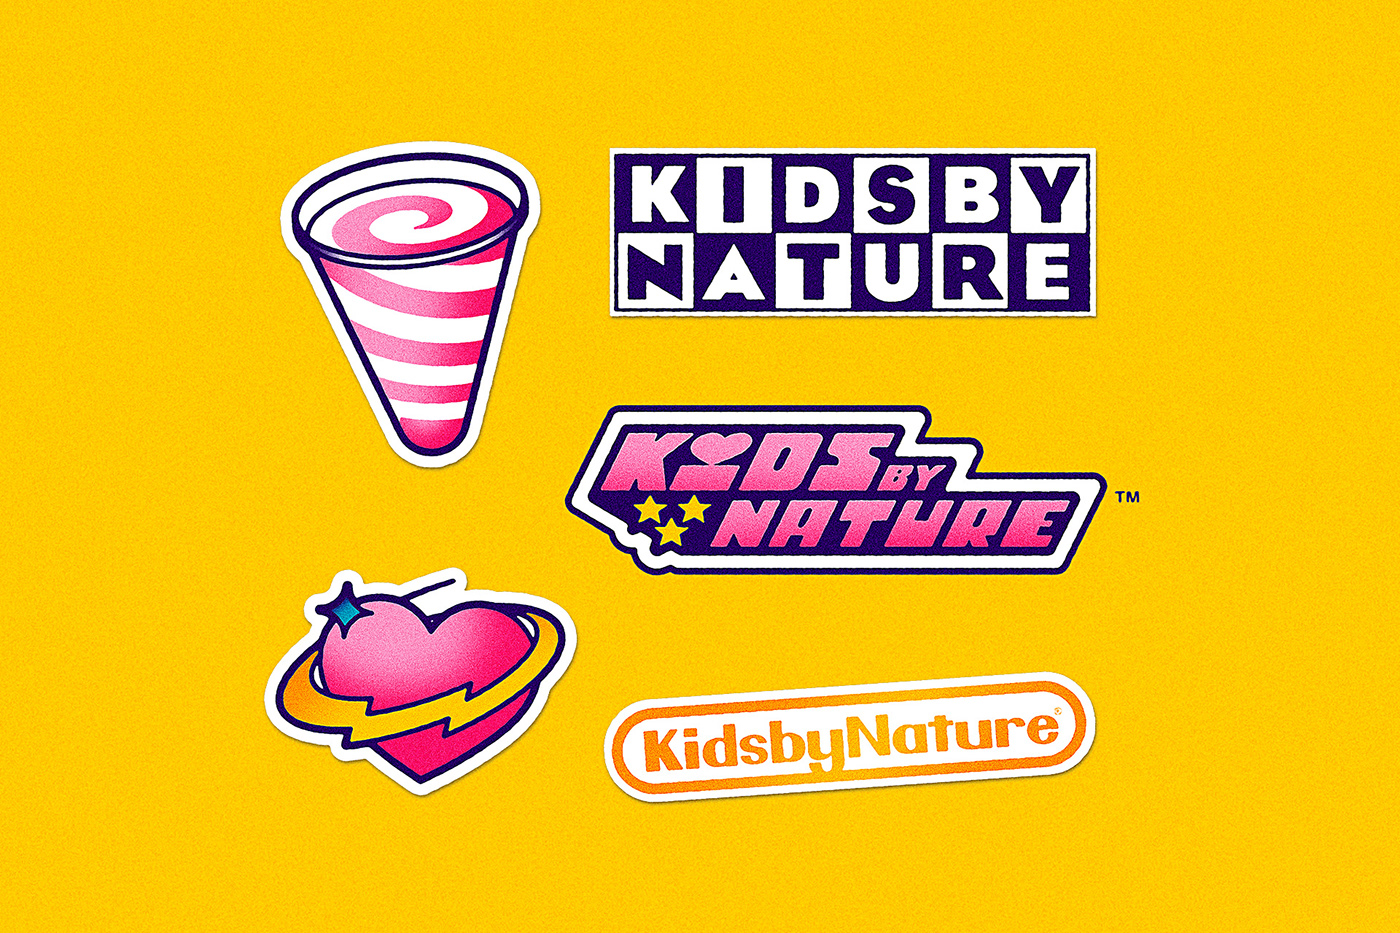 90s brand assets colorful festival Graphics Kit kids by nature logo spoof memorabilia skateboard summer